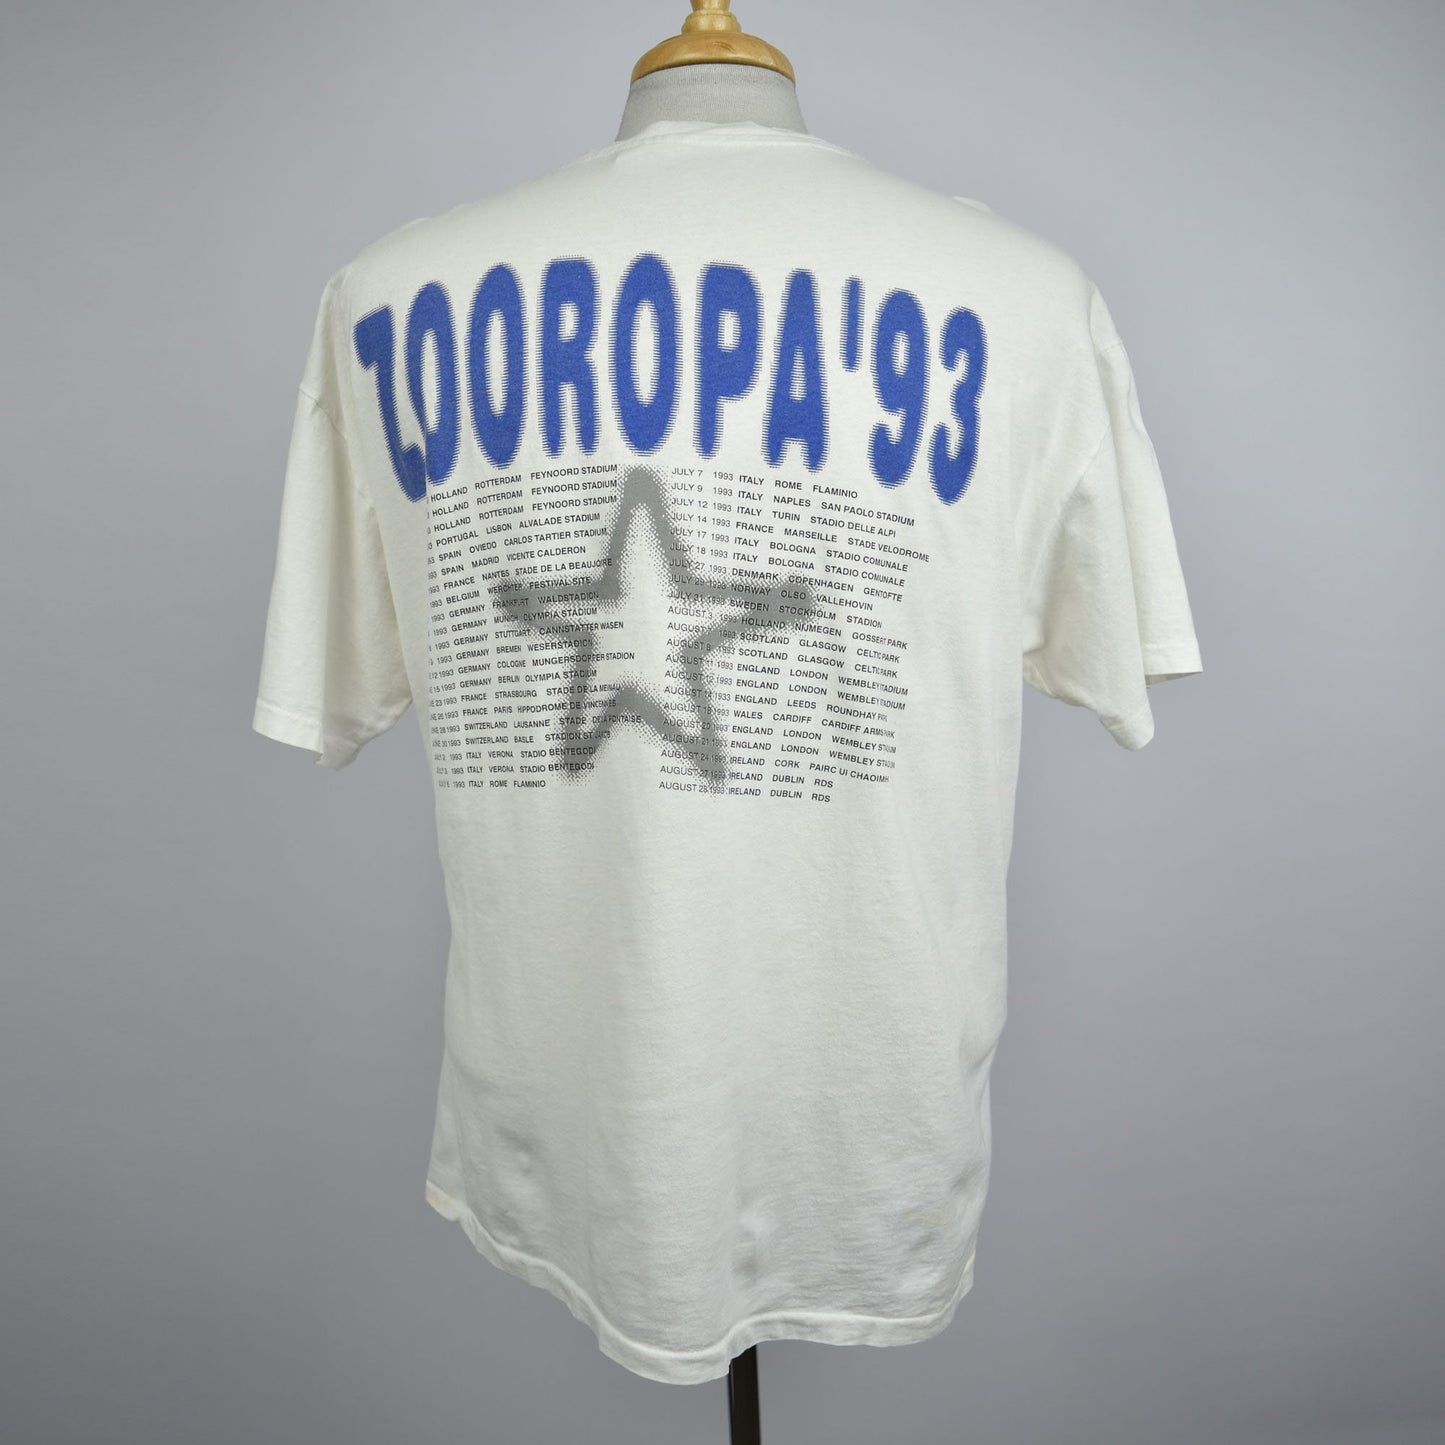 Vintage 1993 U2 Zooropa Tour Tee Made in USA 100% Cotton- Size XL